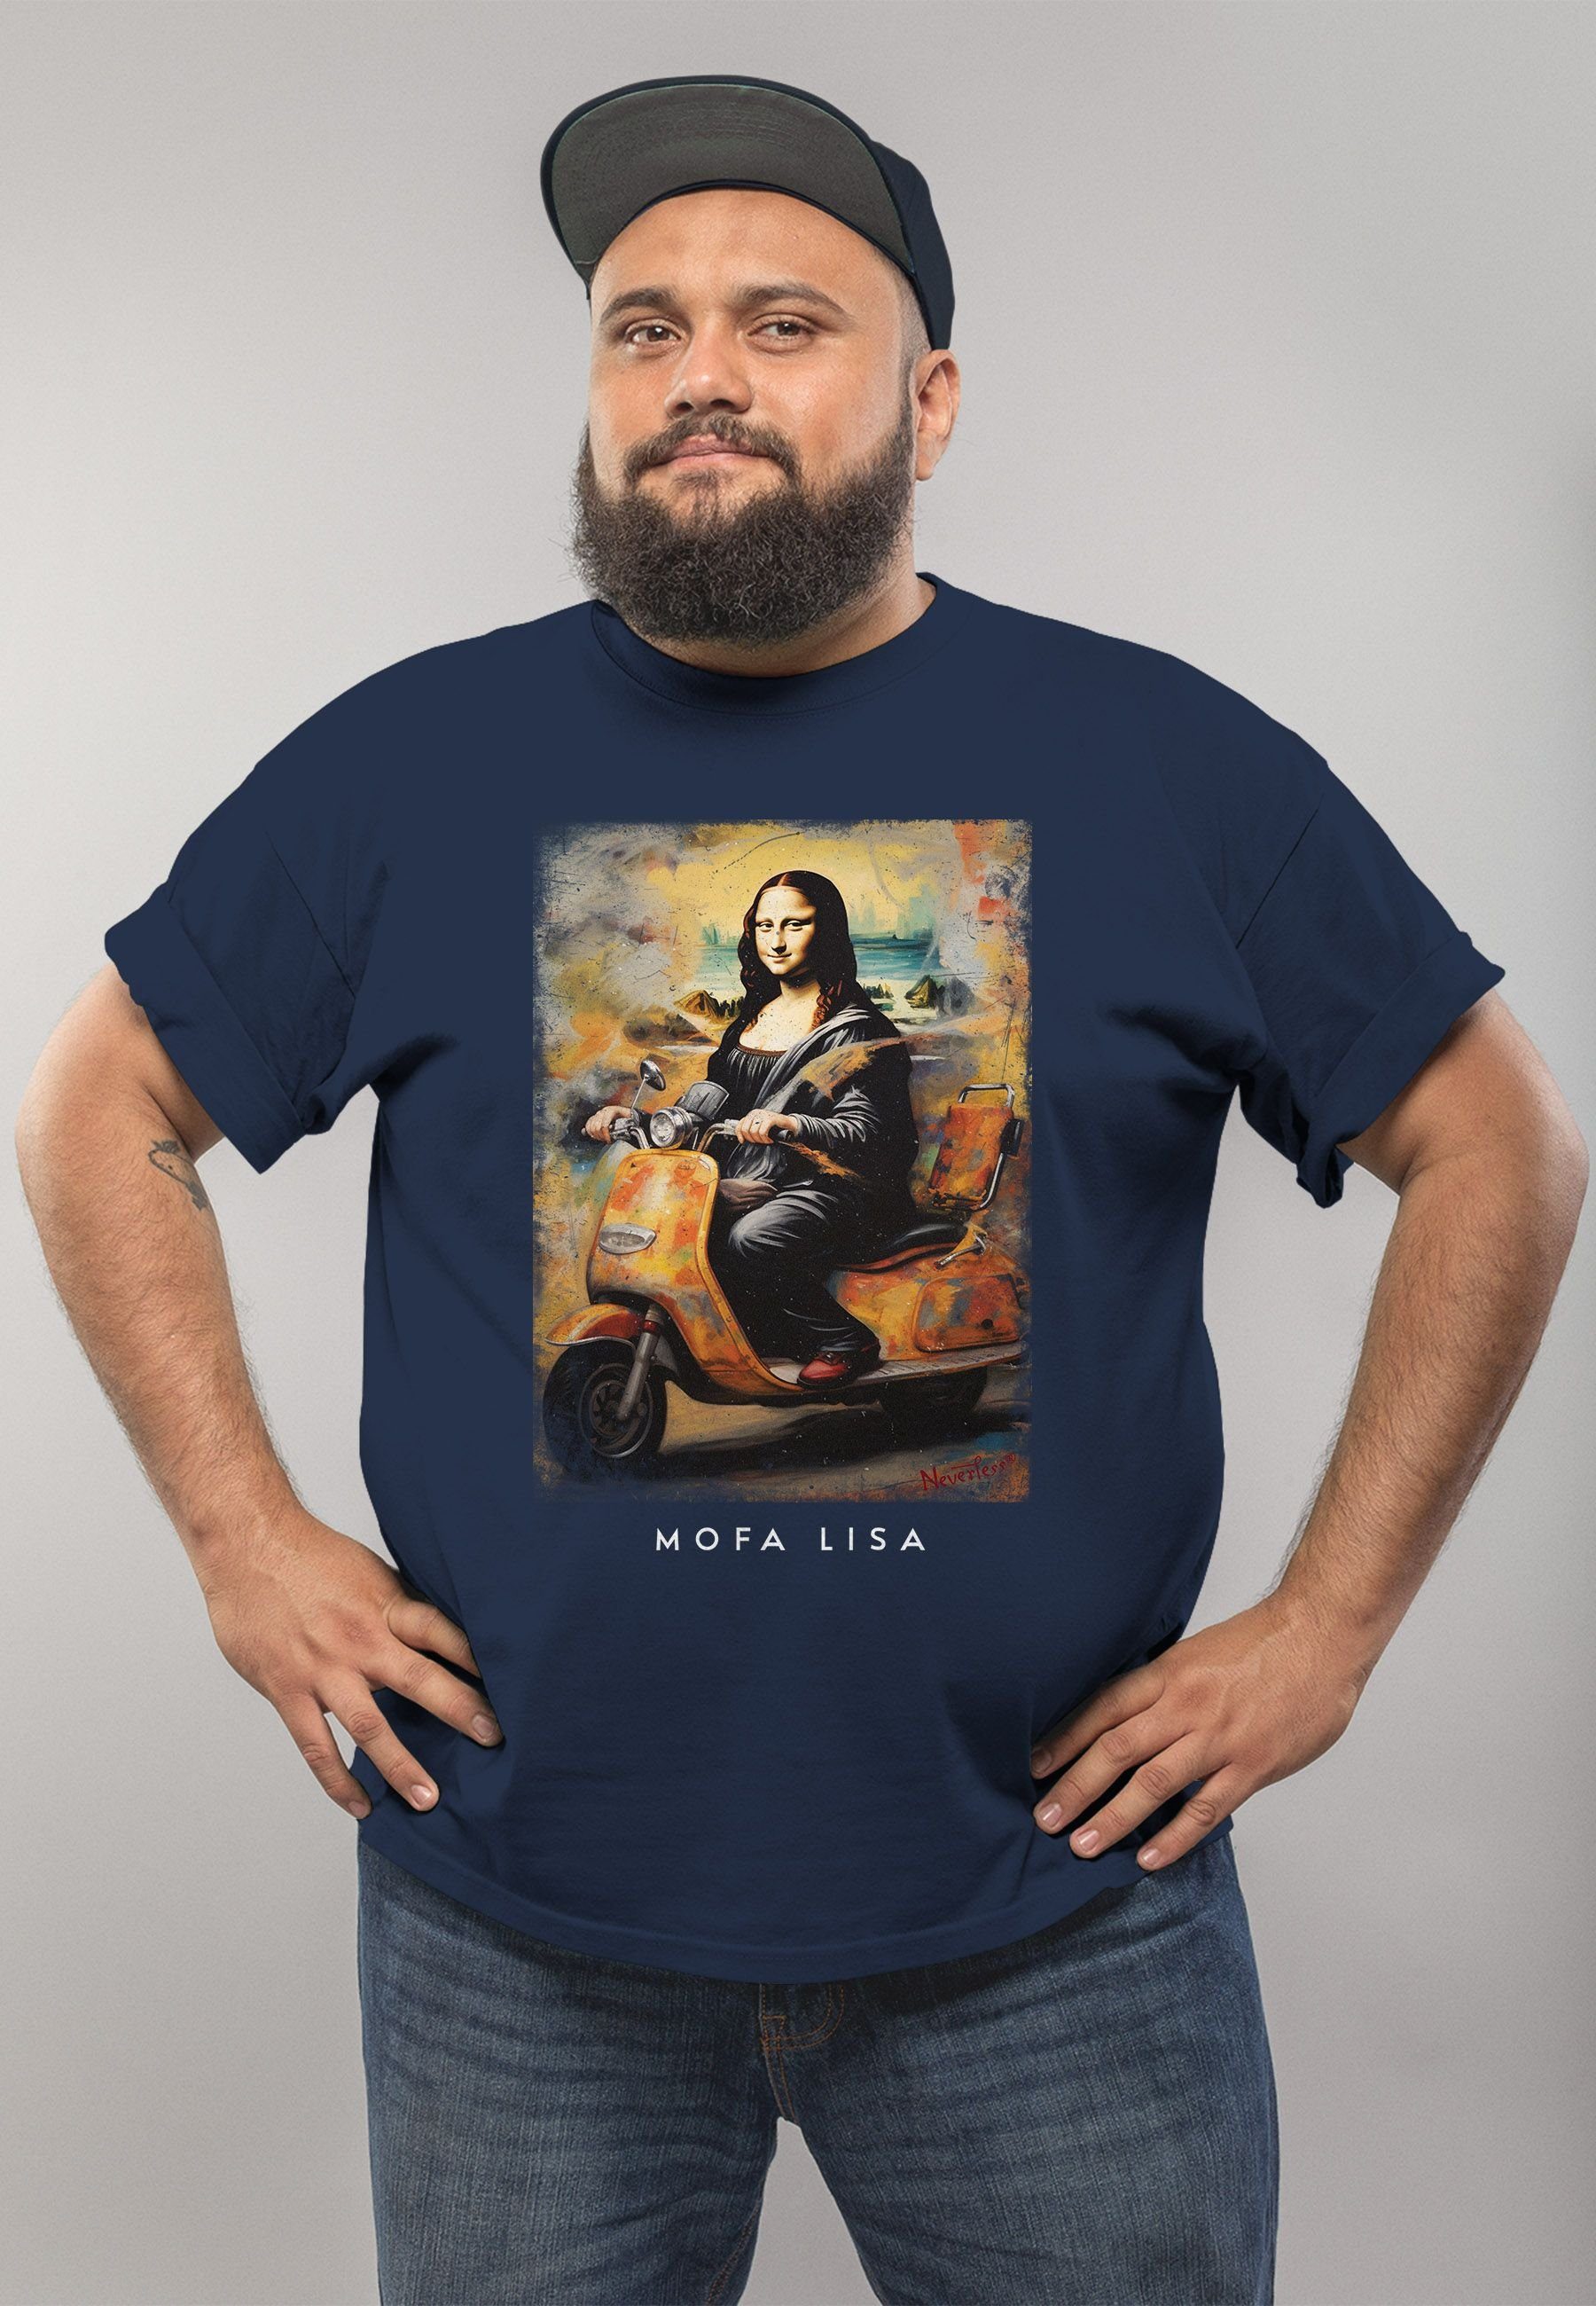 Herren Meme Print MoonWorks T-Shirt mit Mona Lisa Print Lisa Kapuzen-Pullover Print-Shirt Aufdruck Parodie Mofa navy